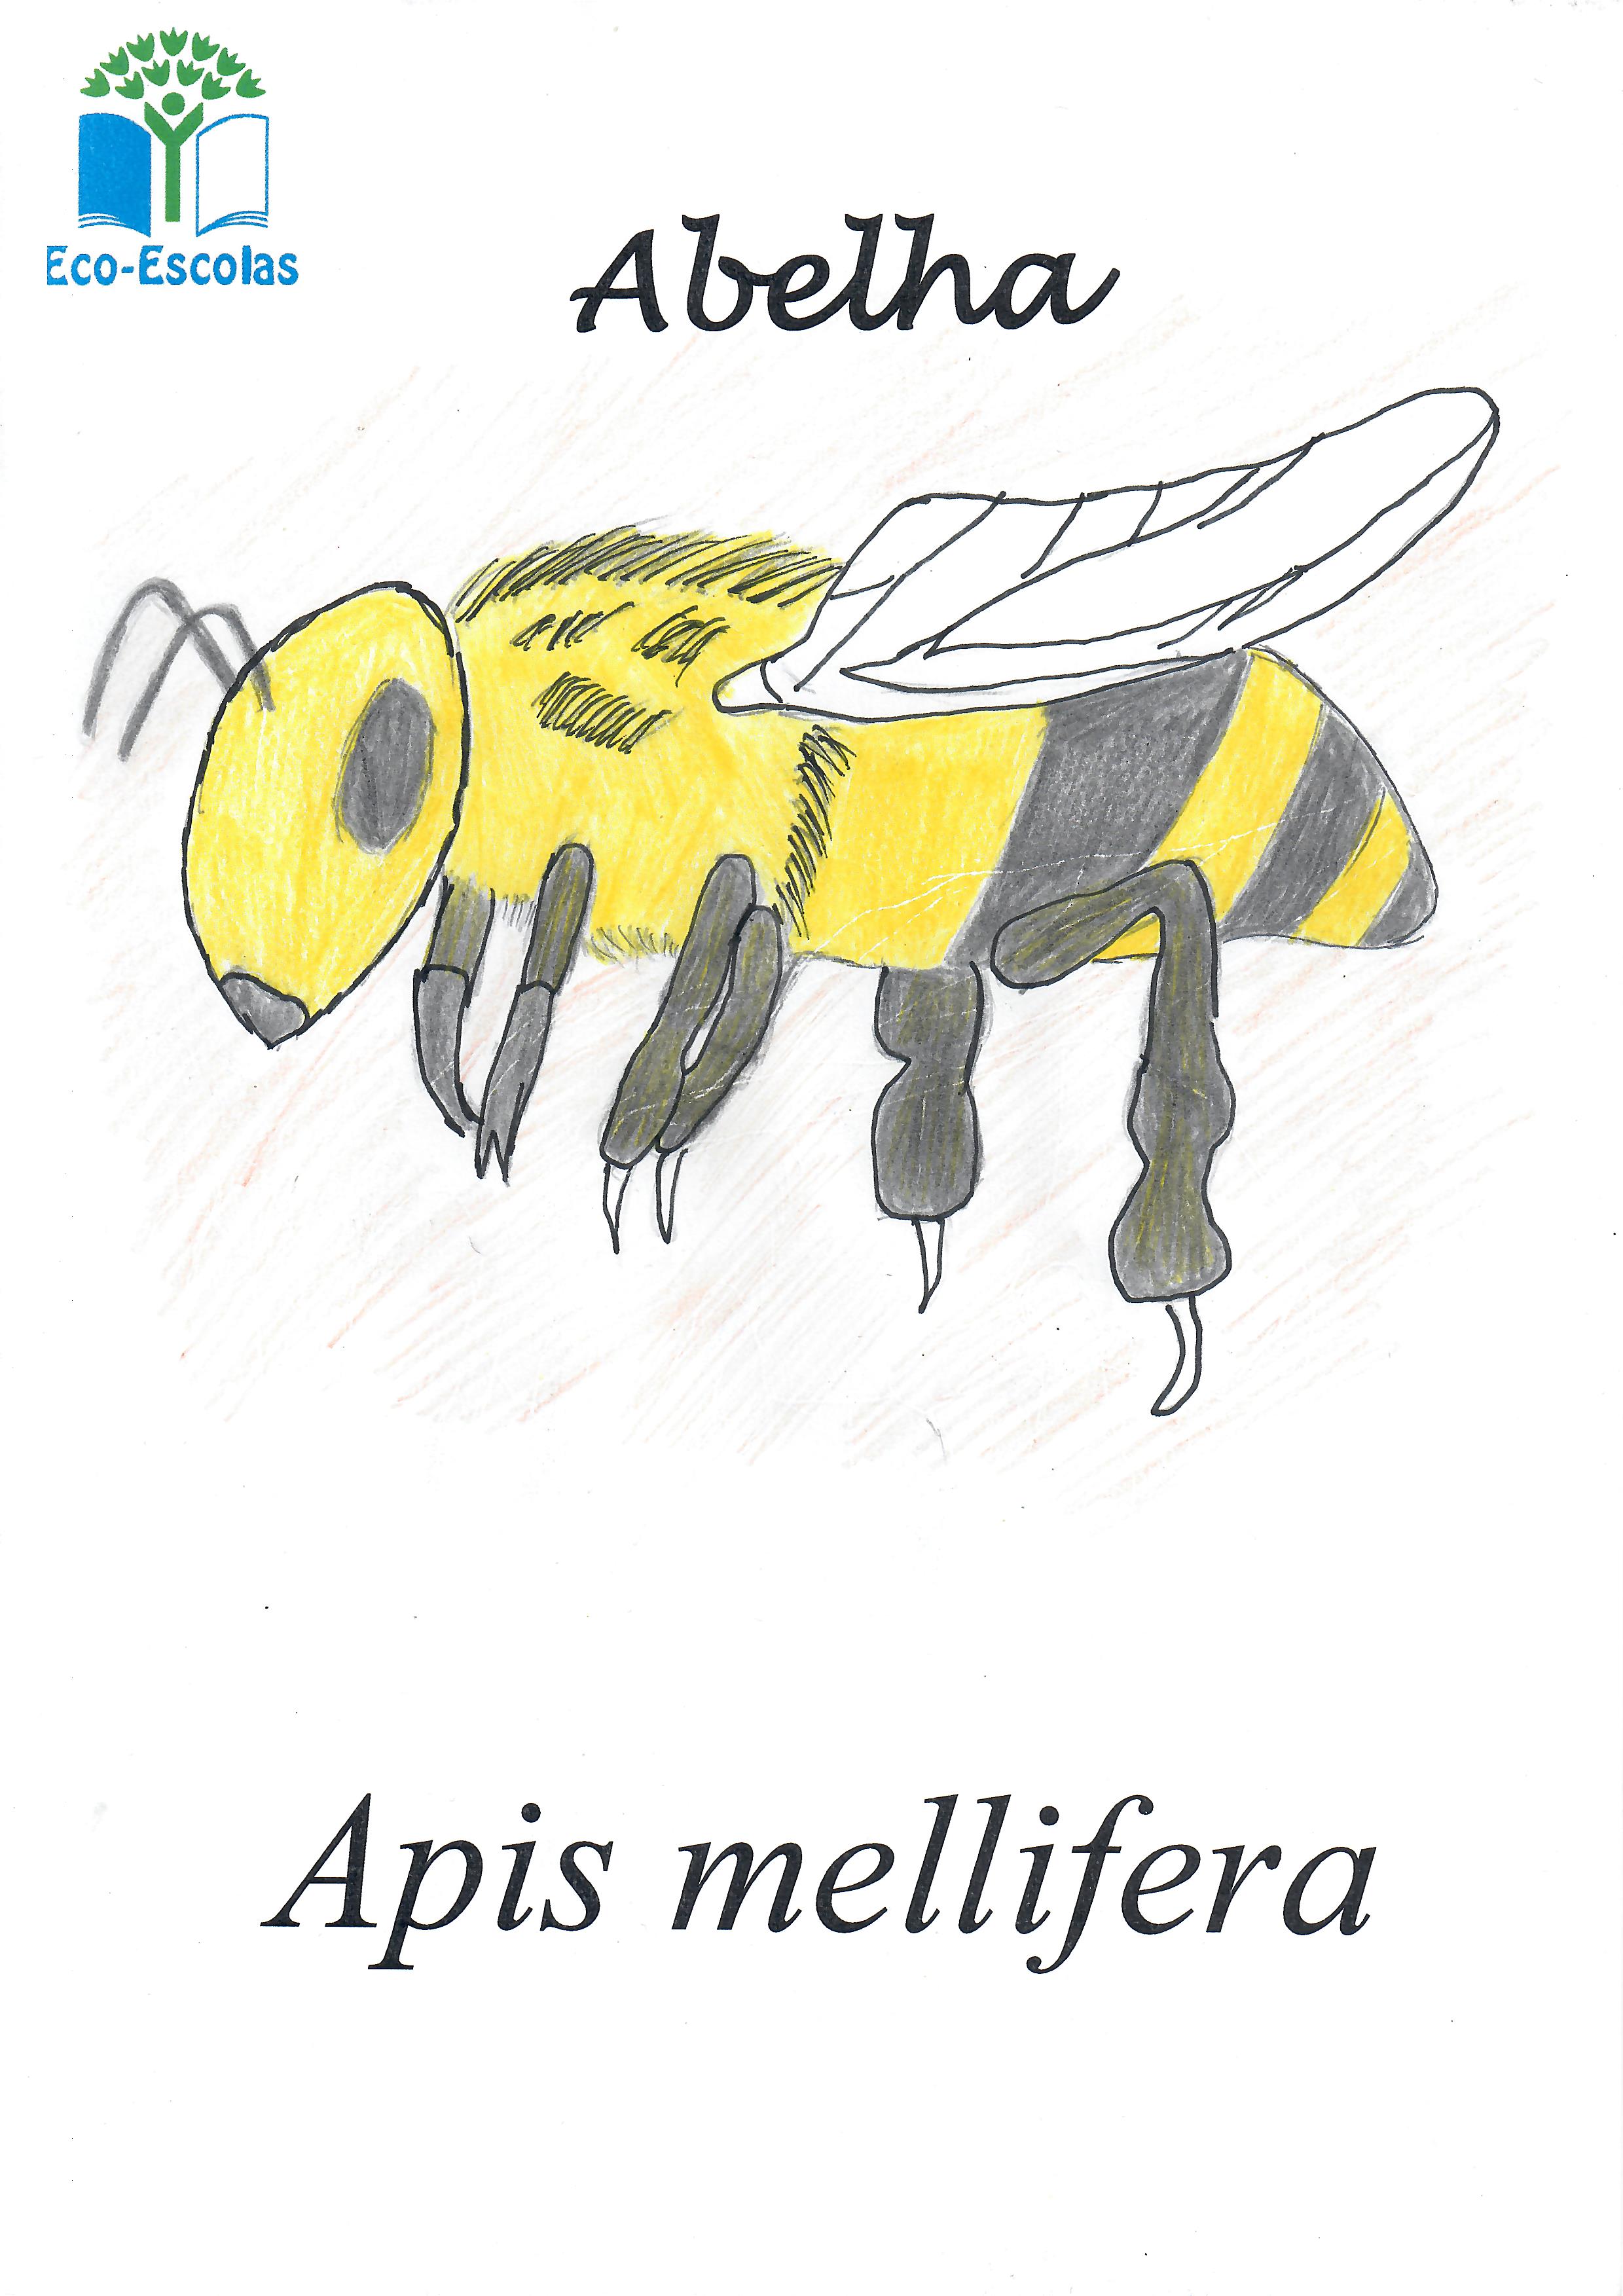 Abelha - Apis mellifera